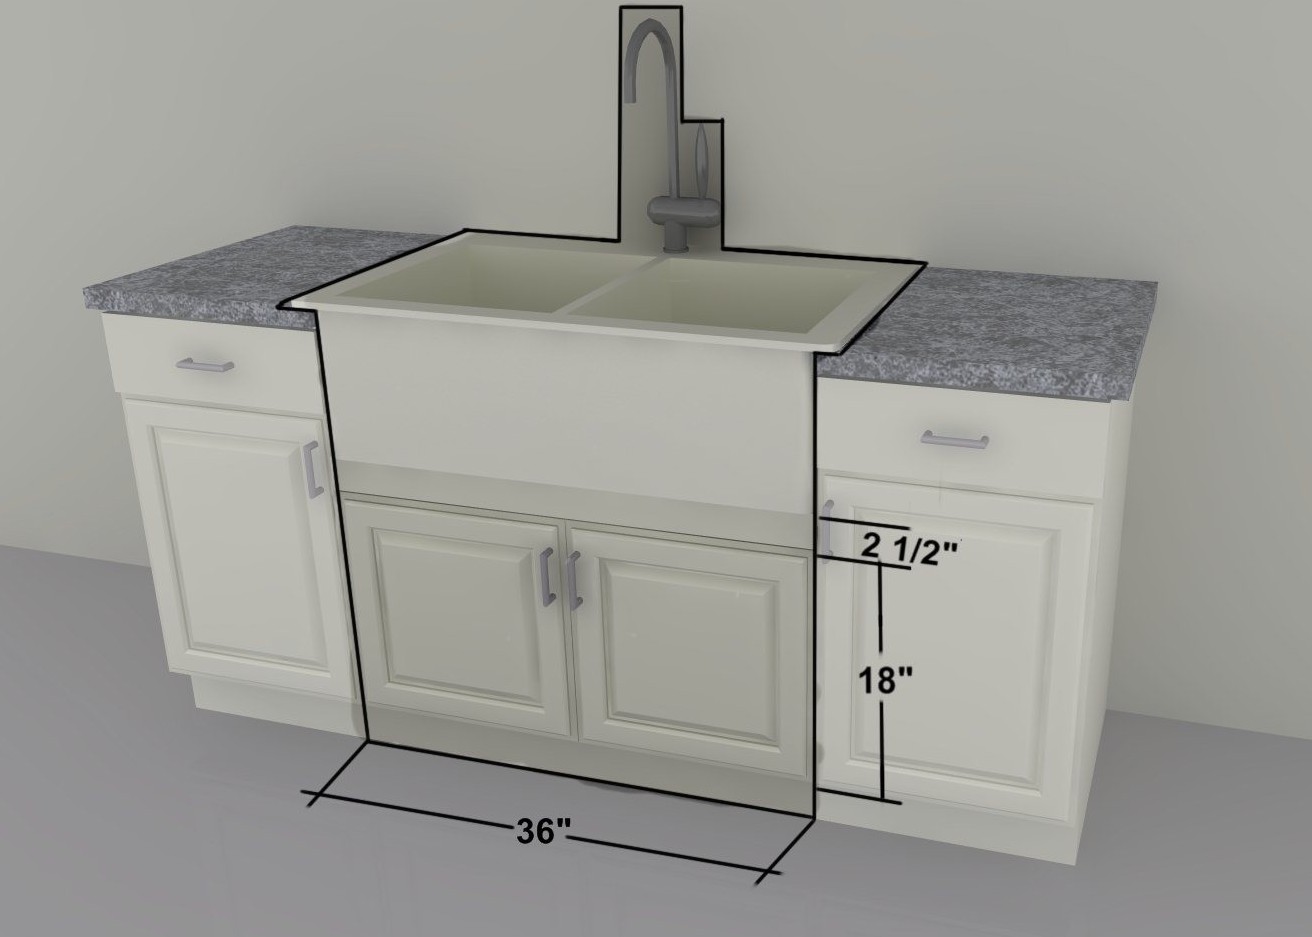 standard kitchen sink base cabinets